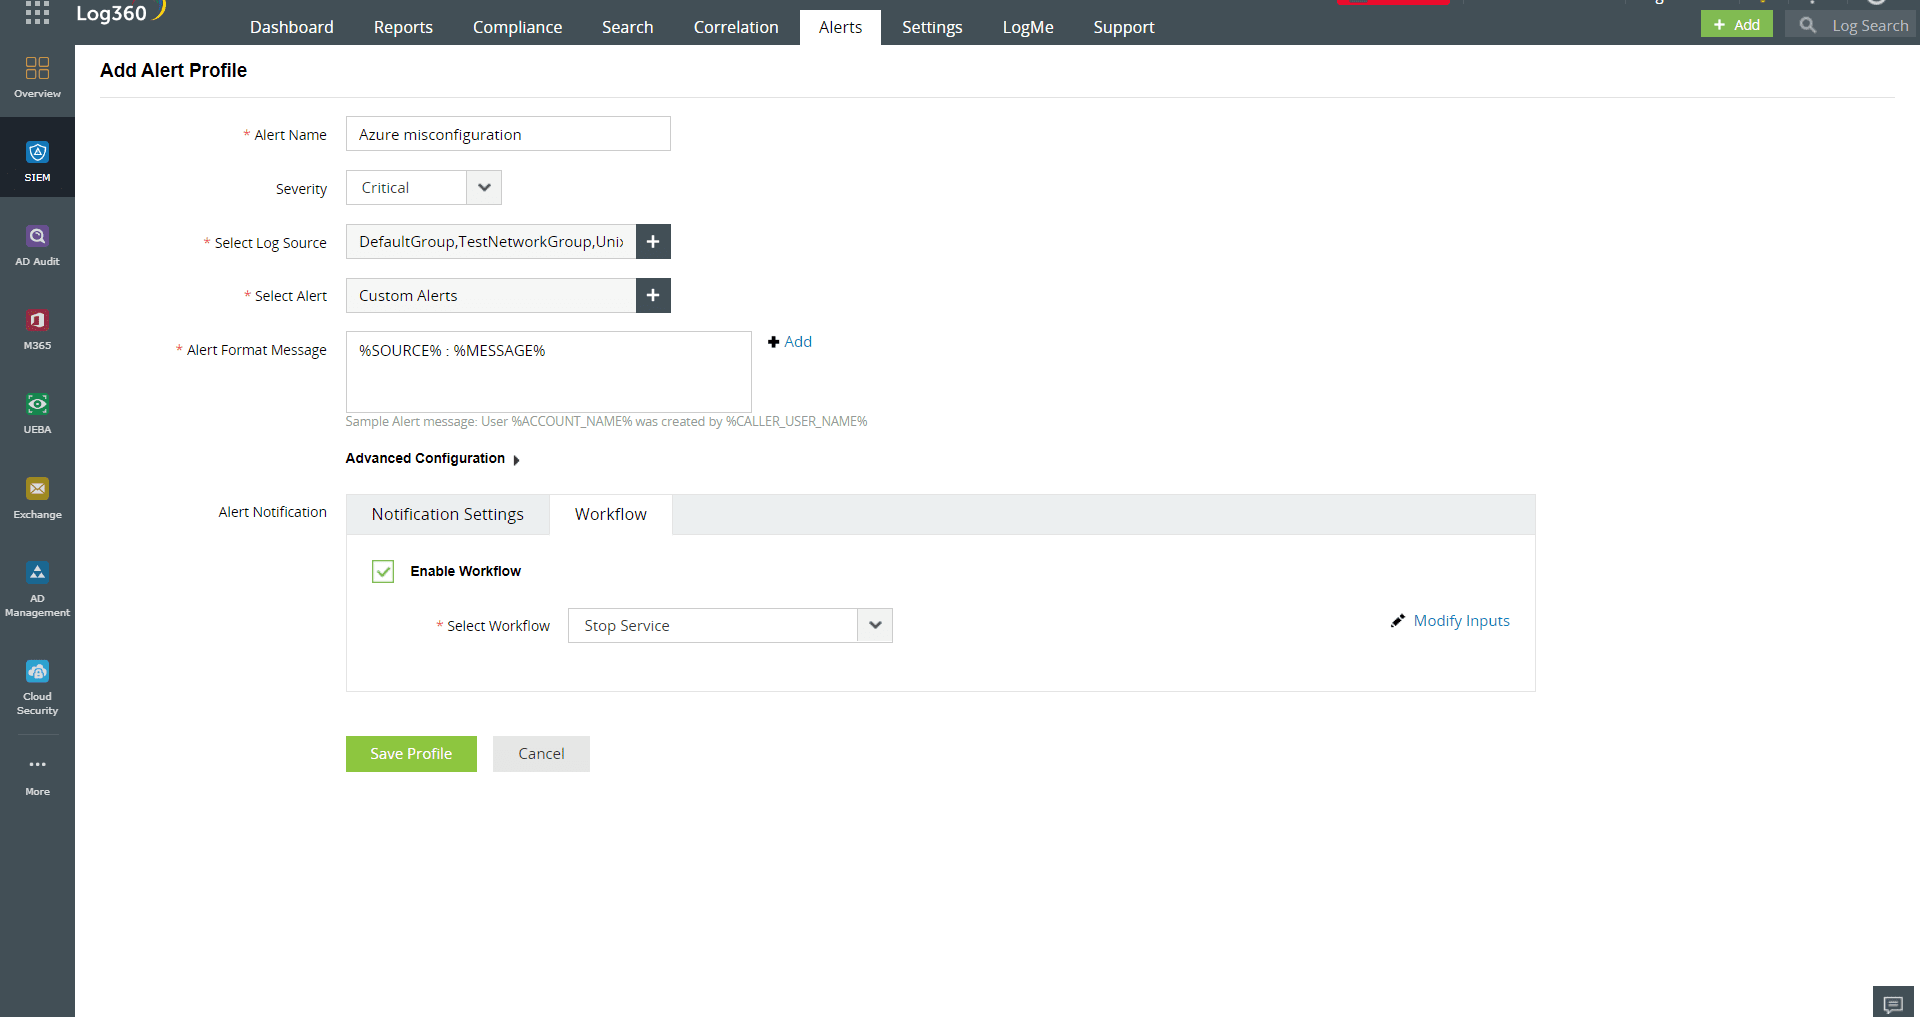 Custom alert profile for Azure misconfiguration in Log360